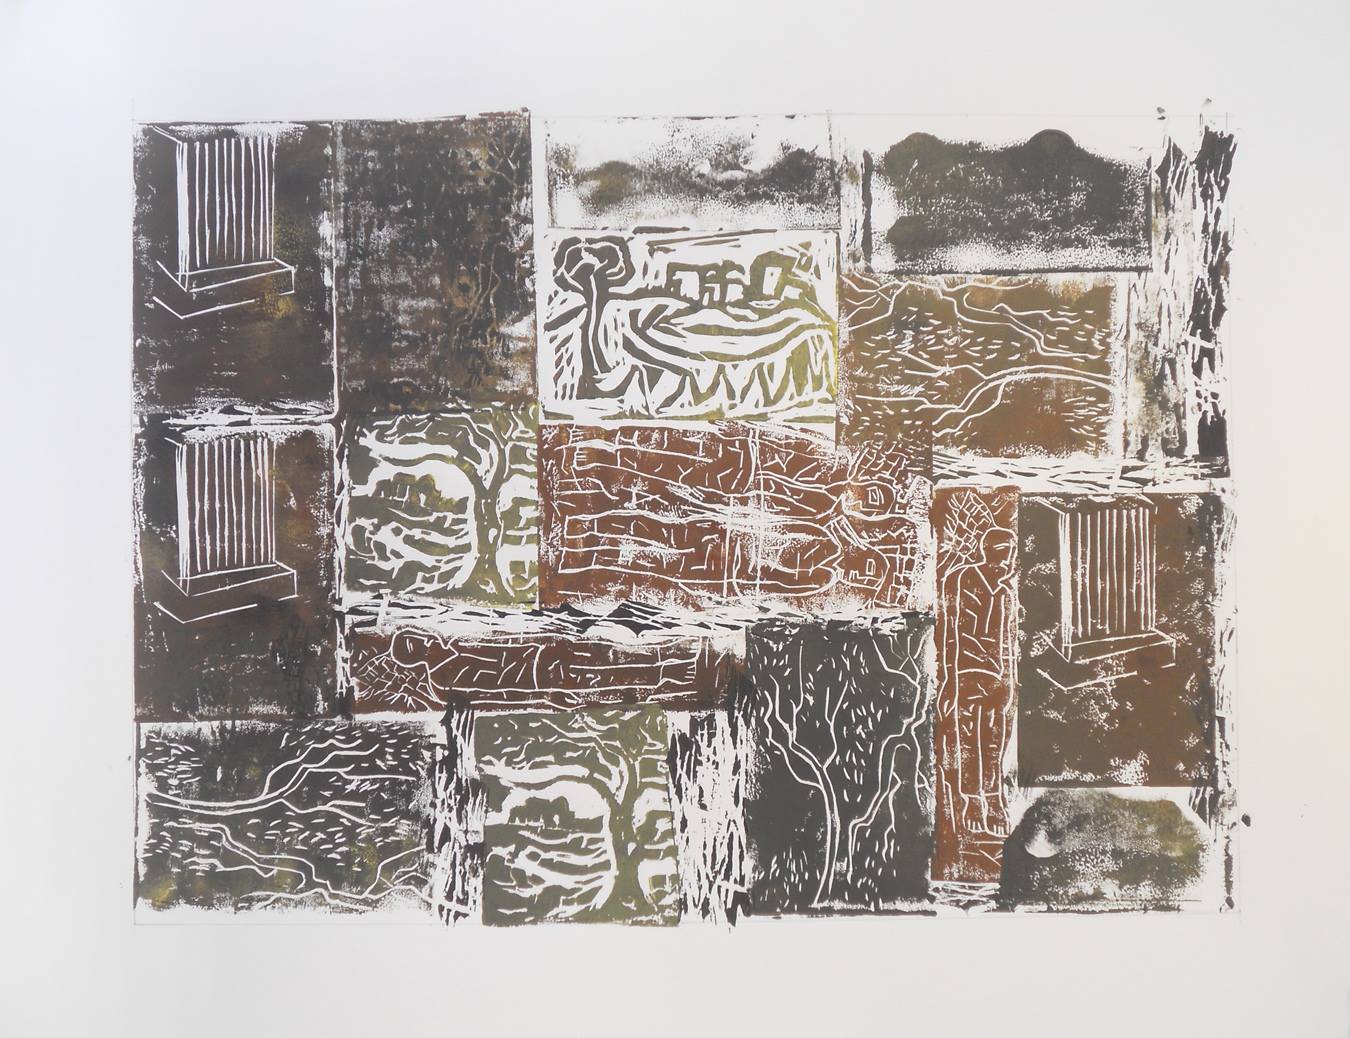 Demolished, lino print on paper, 2014